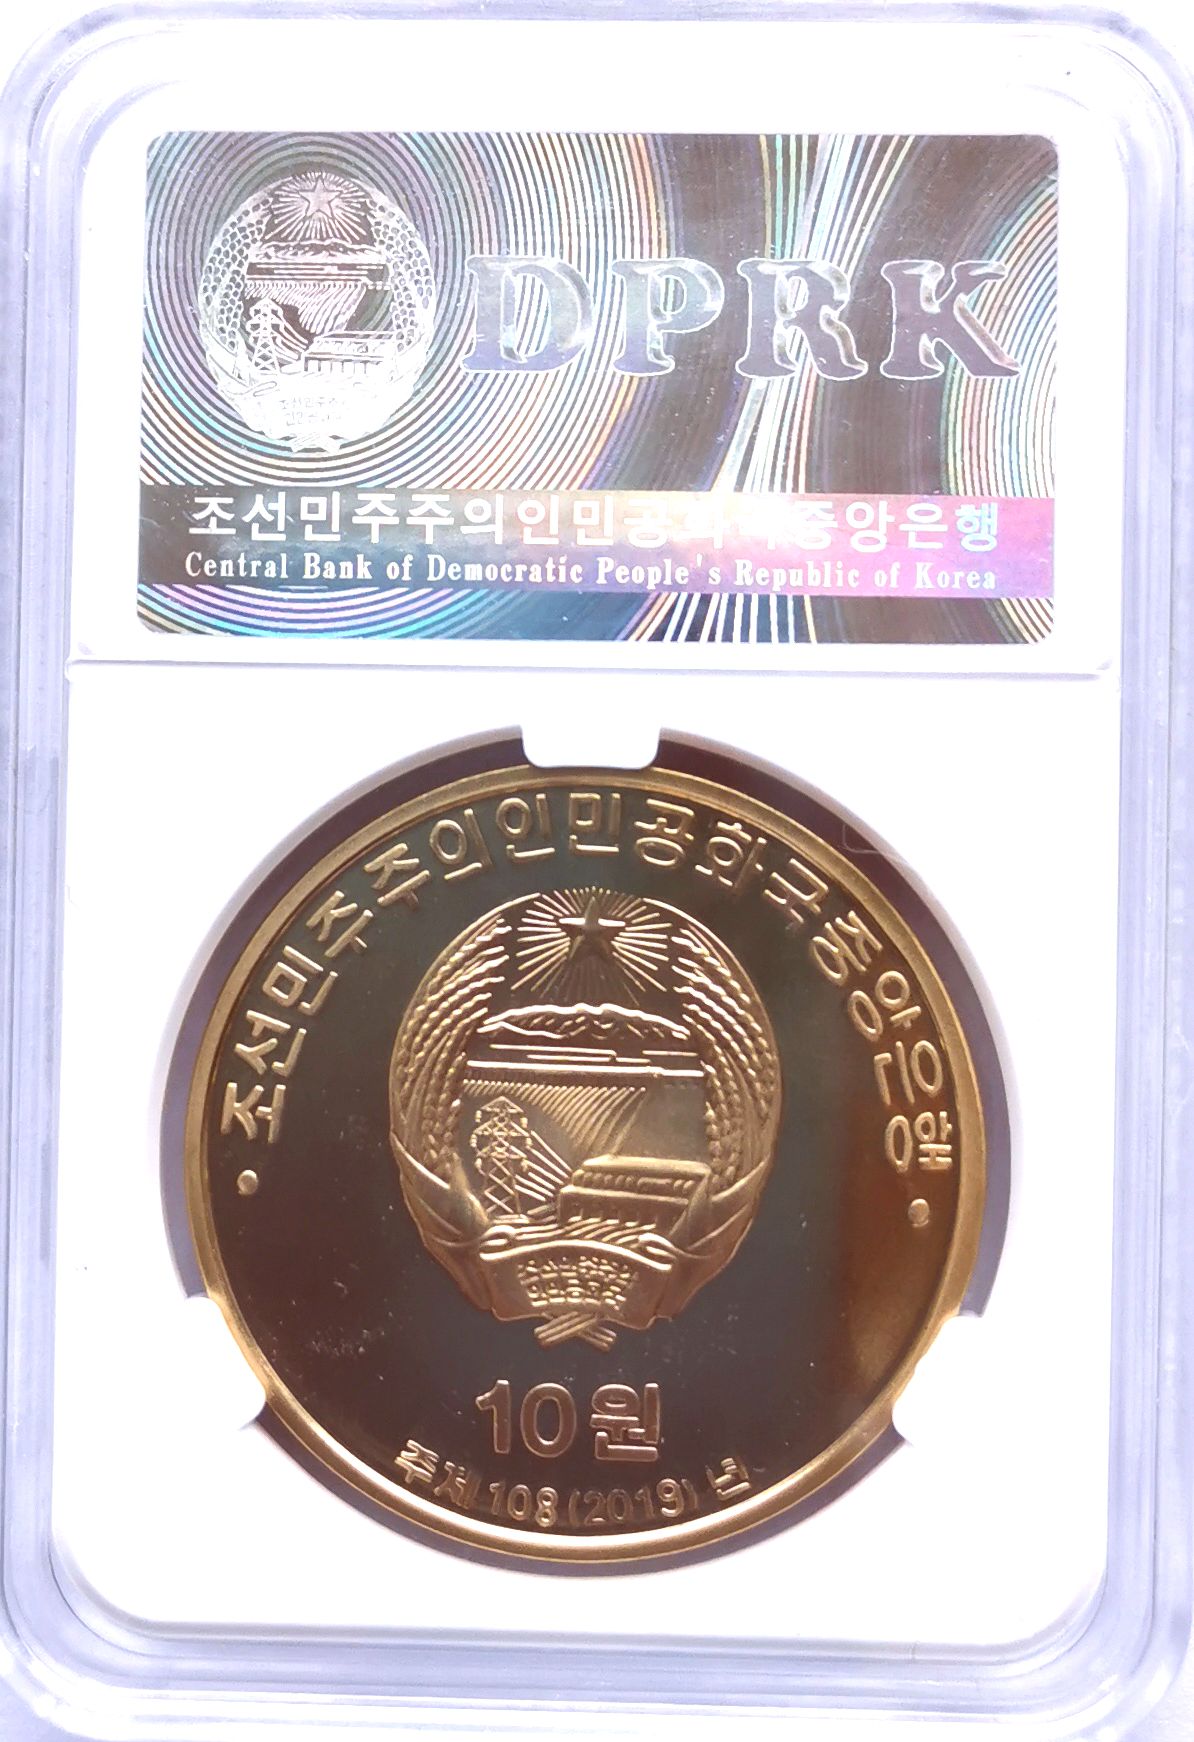 L3387, Visiting Korea Proof Coin Series "Stadium", Brass 2019